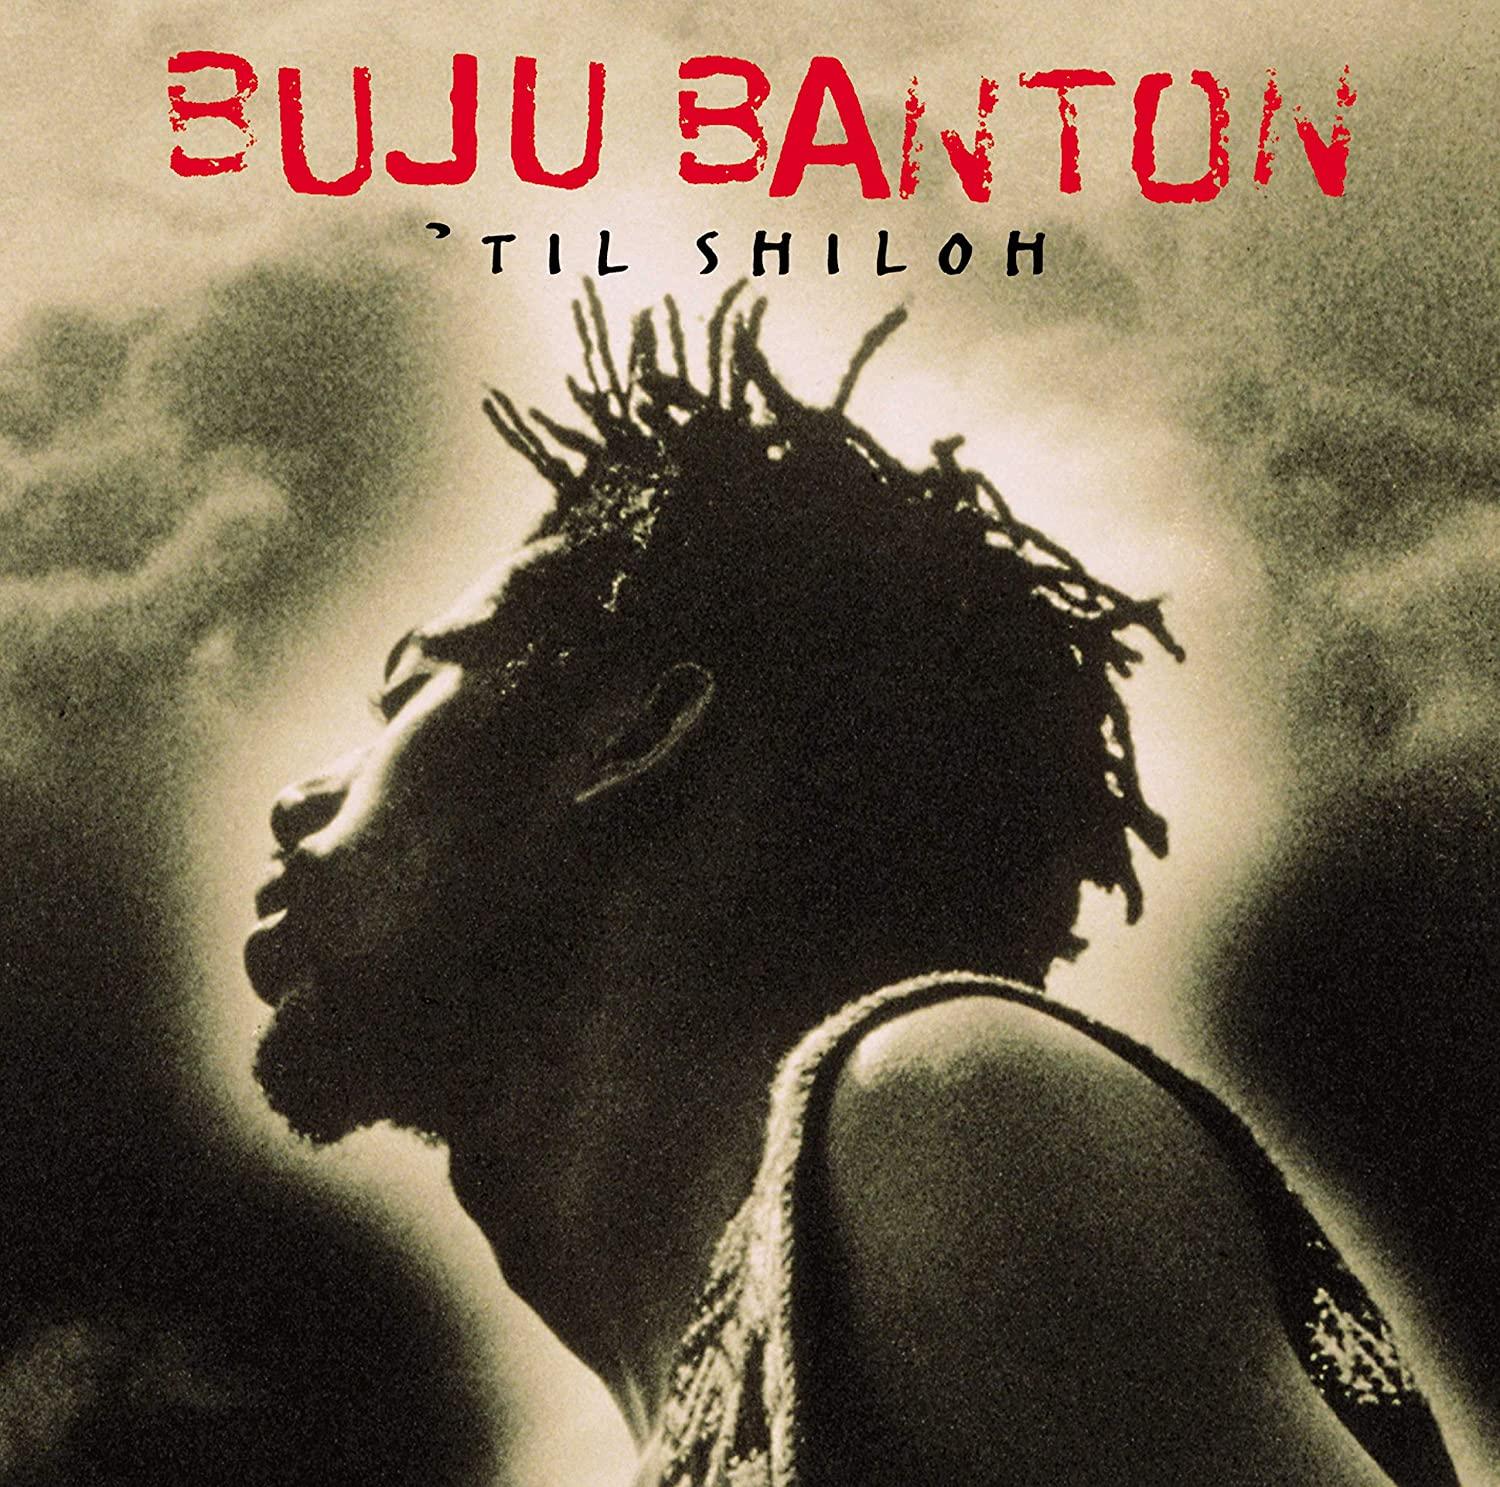 BUJU BANTON - Til Shiloh 25th Anniversary (2LP)